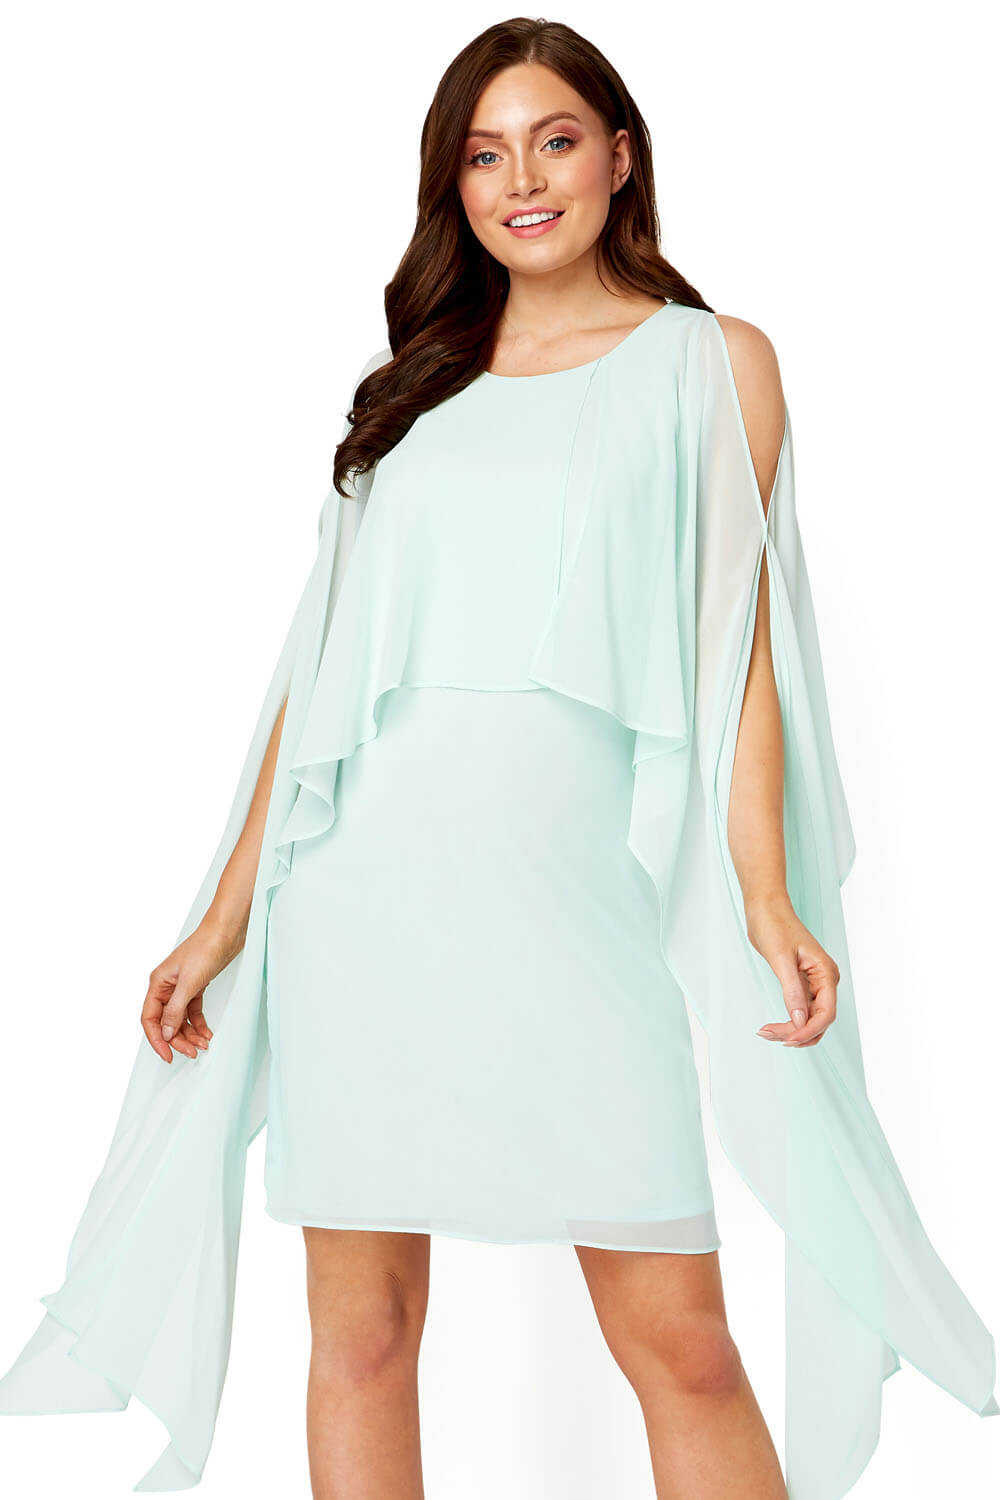 Mint Chiffon Cold Shoulder Sleeve Dress, Image 2 of 5